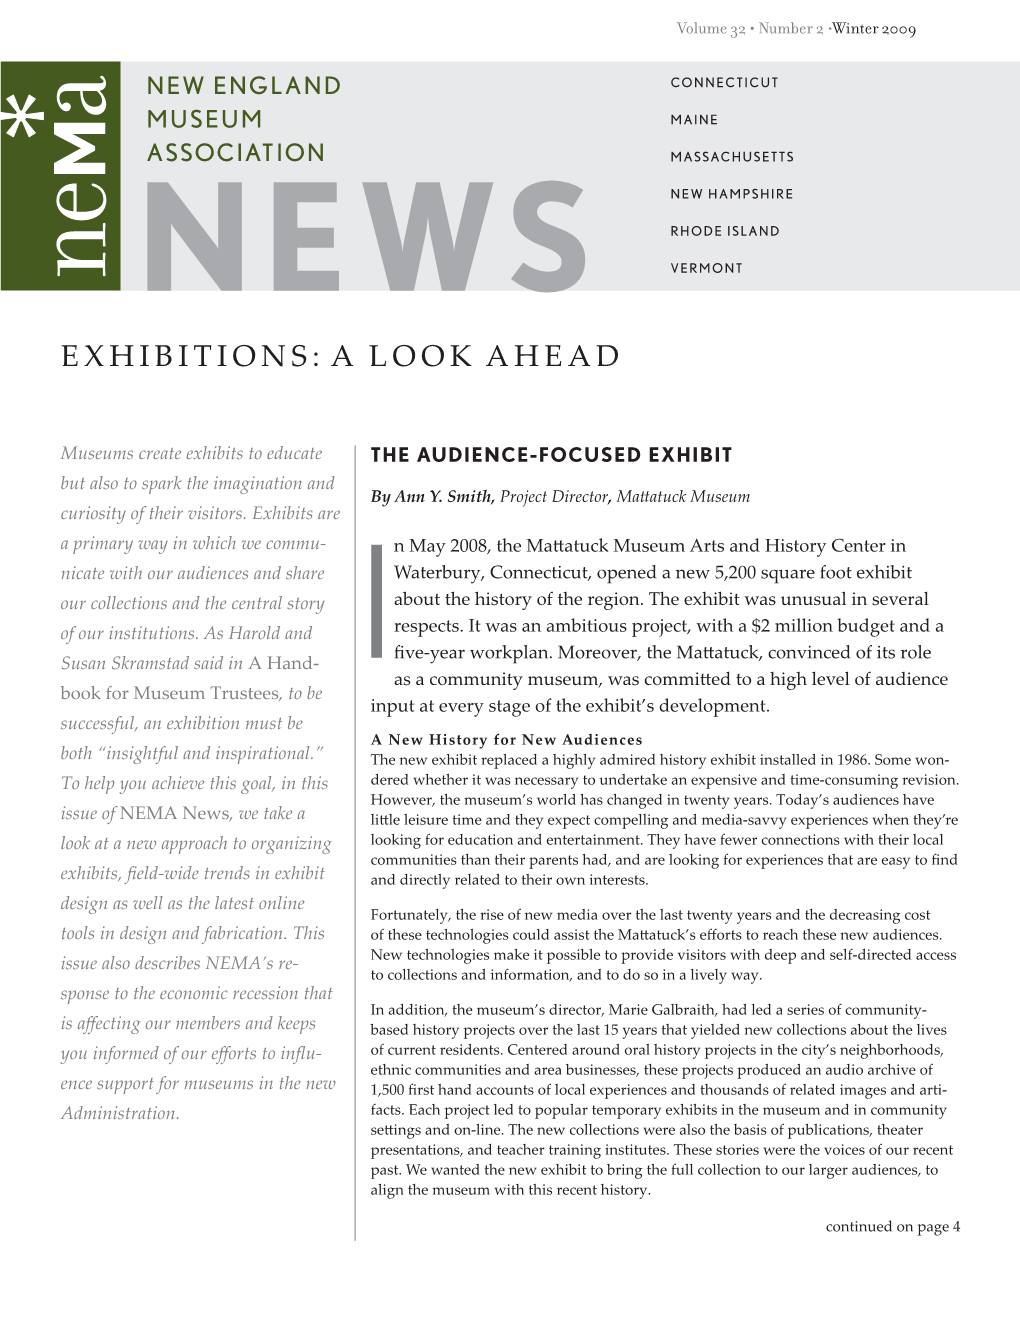 Exhibitions: a Look Ahead